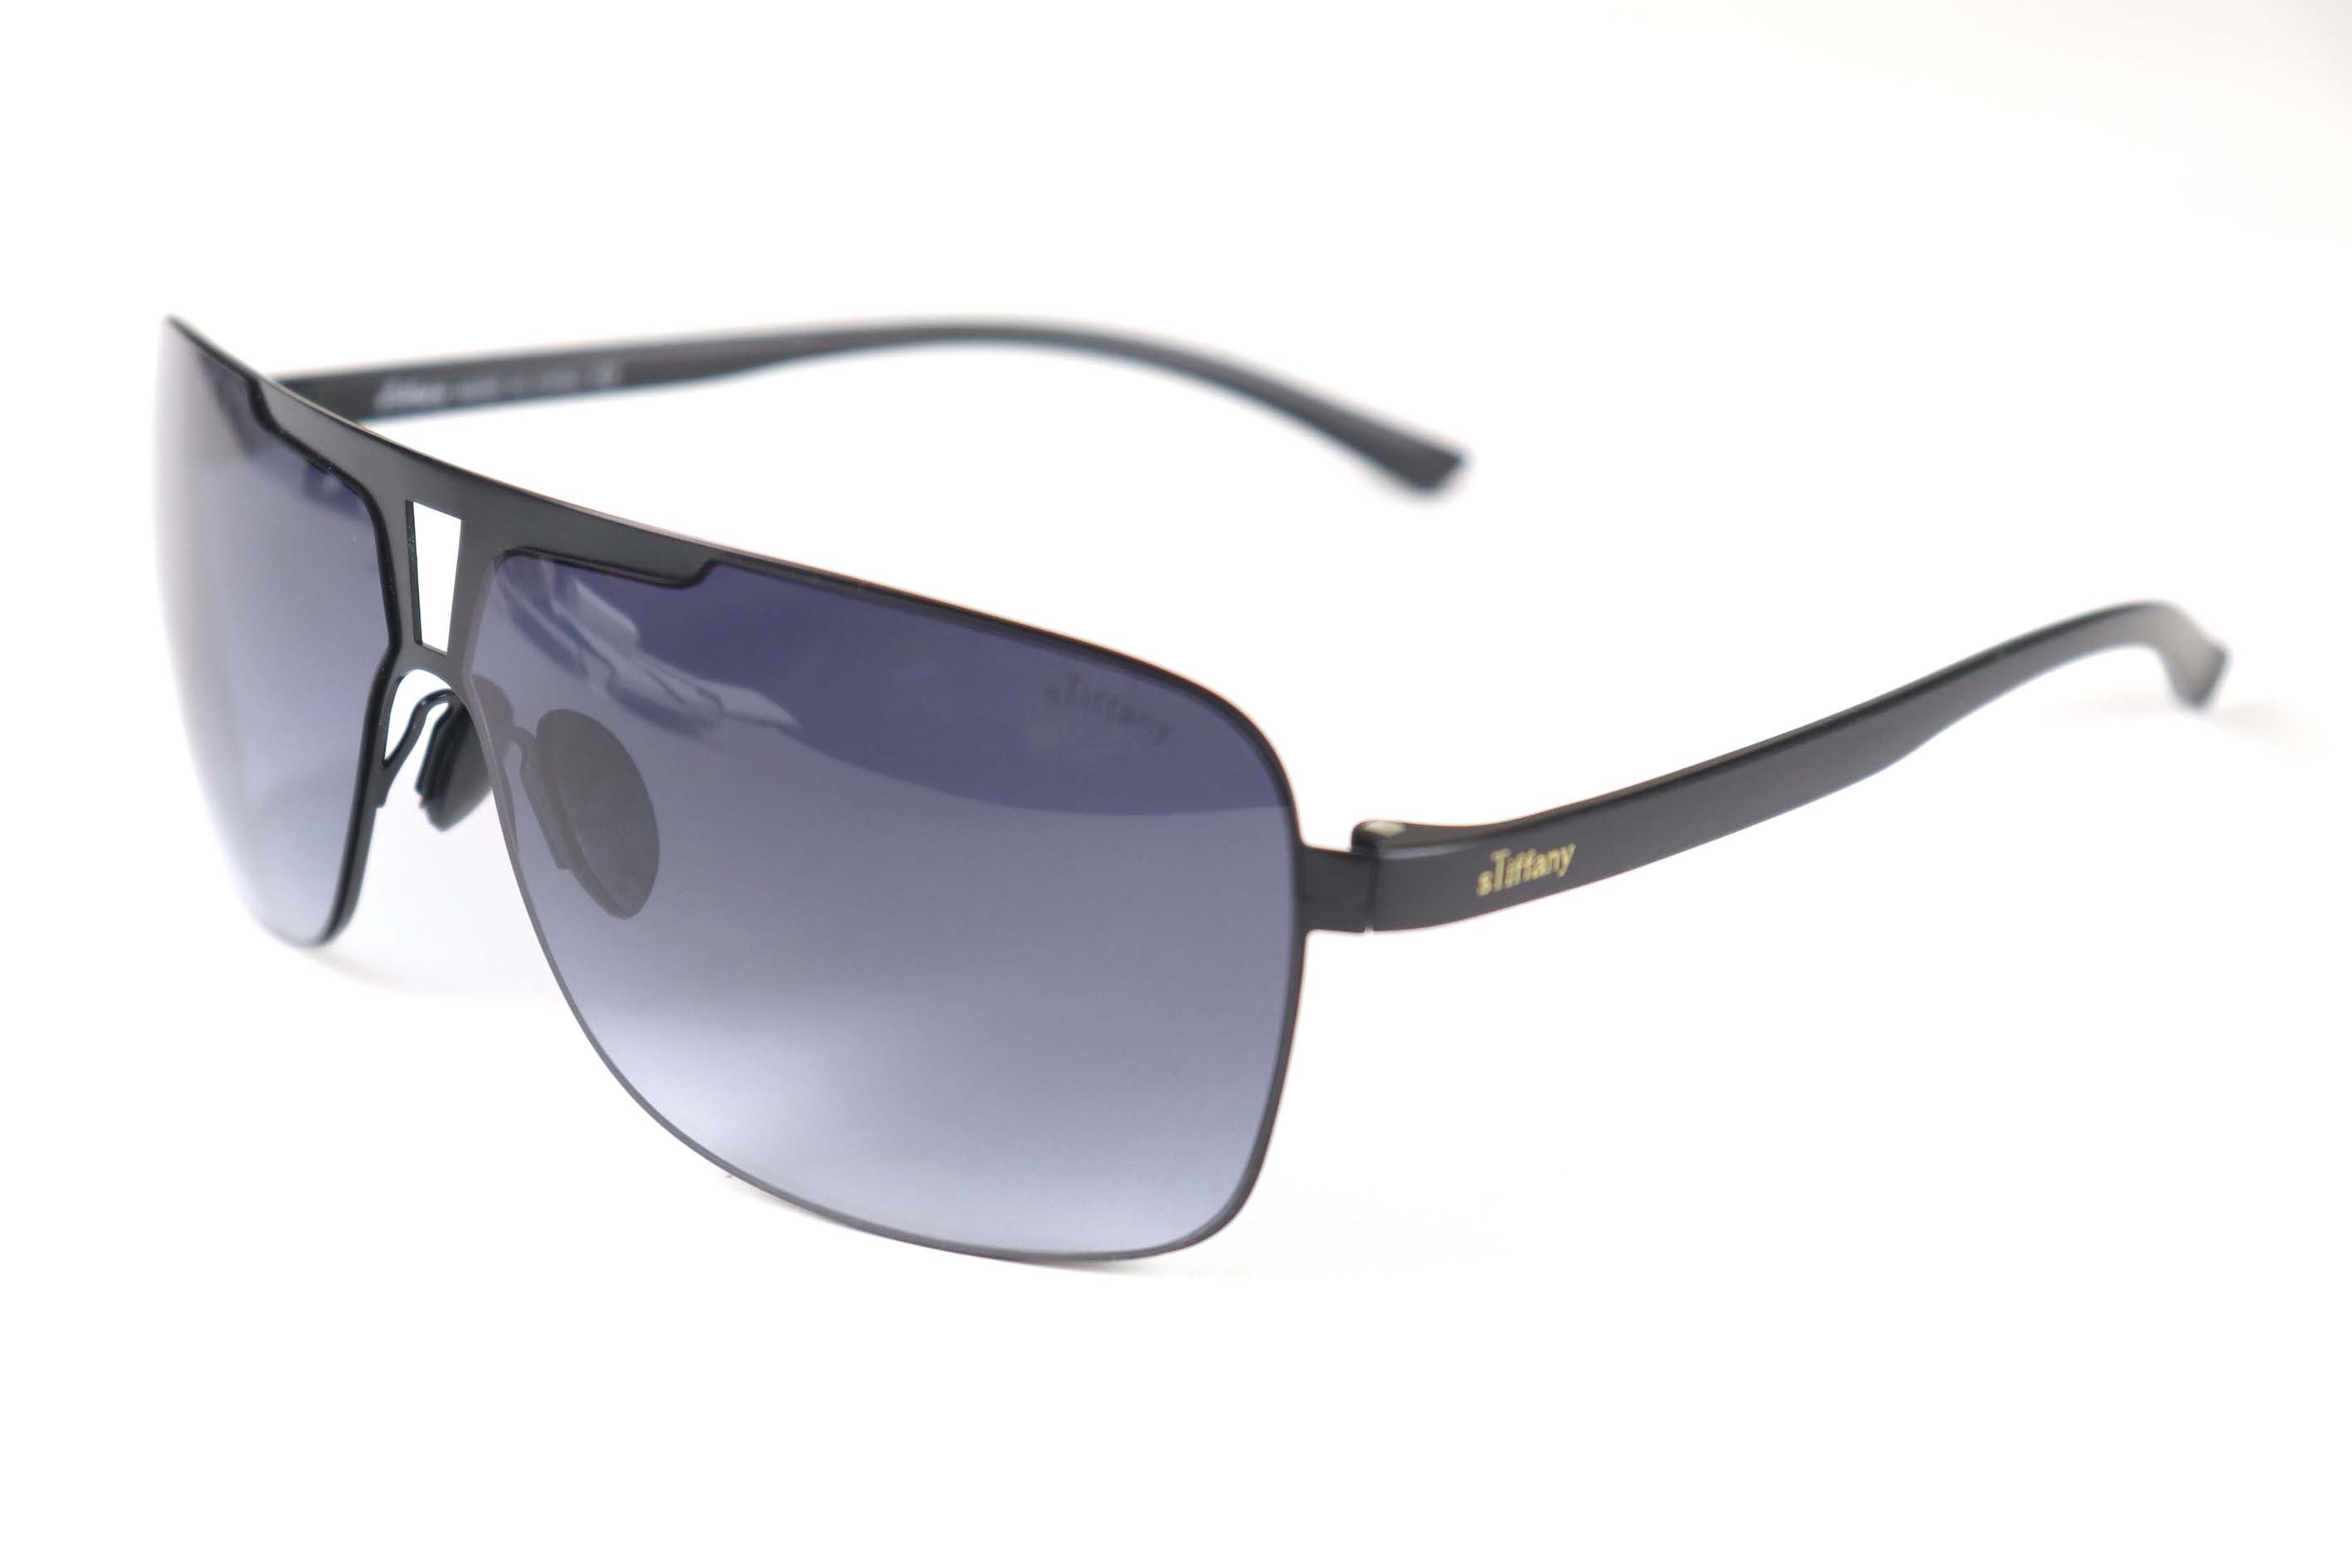 Stiffany Sunglasses-OR-C1.2-S-8135